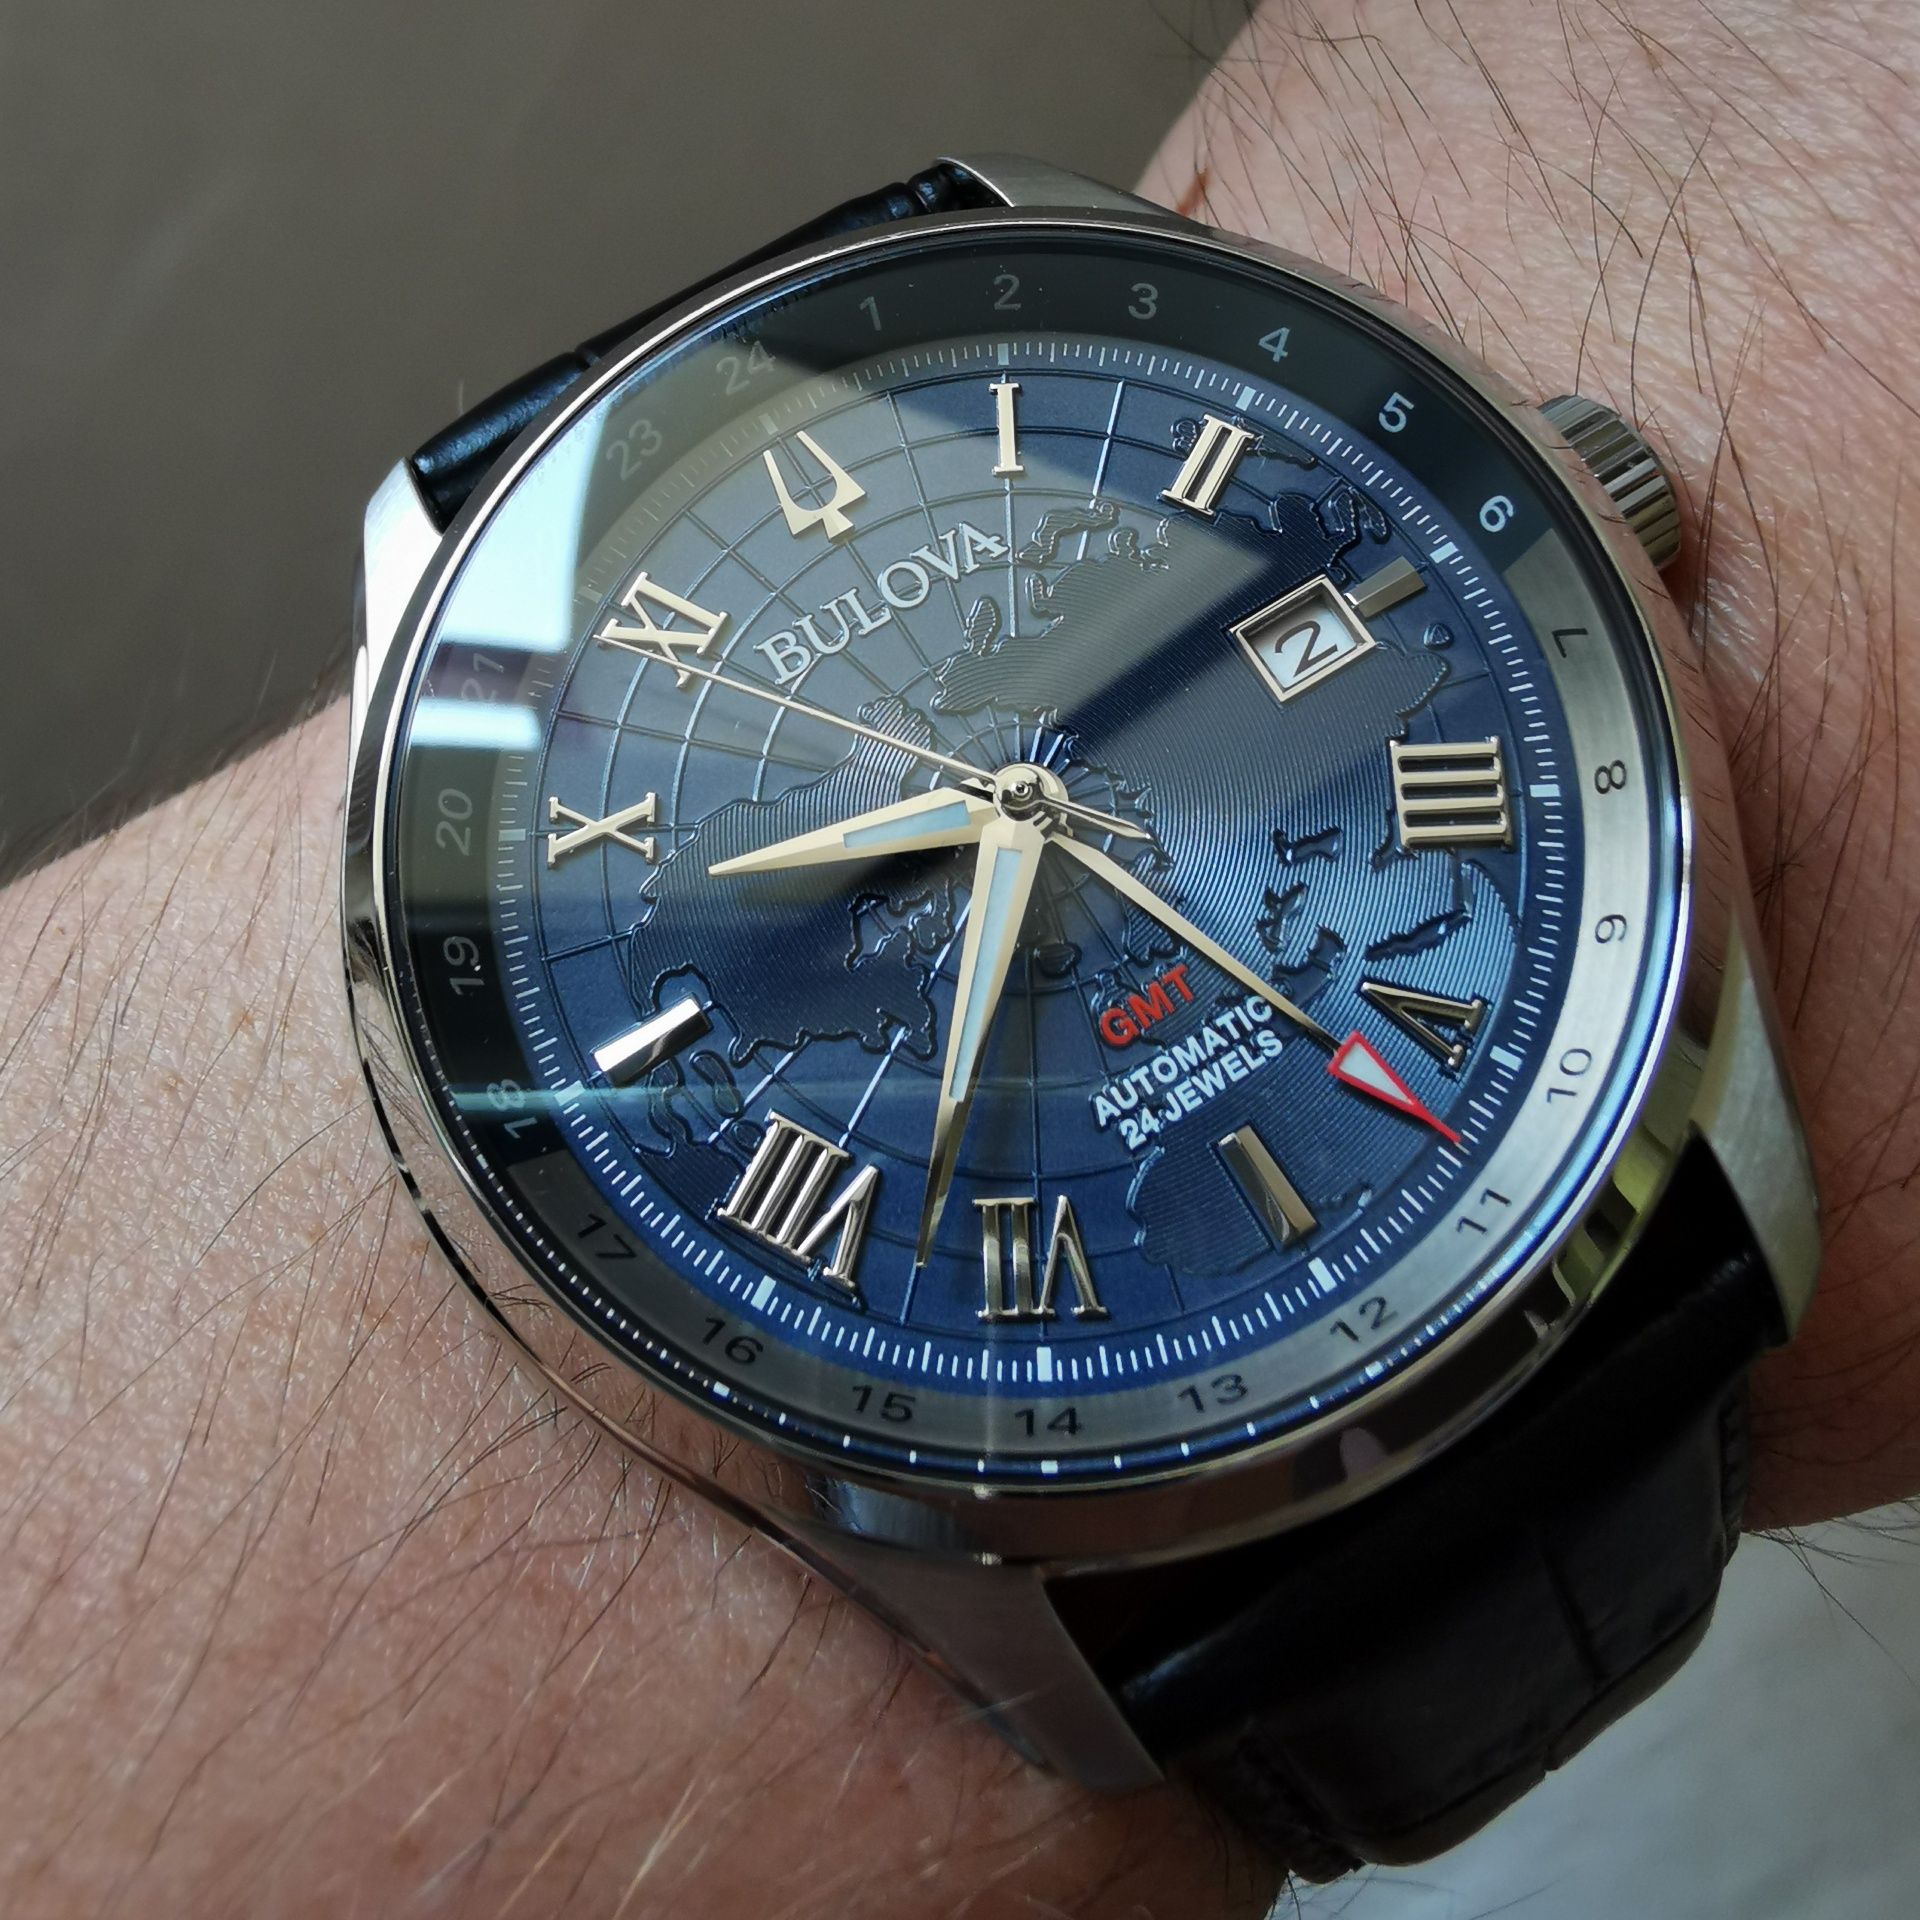 Zegarek Bulova Wilton GMT druga strefa czasowa najnowszy model